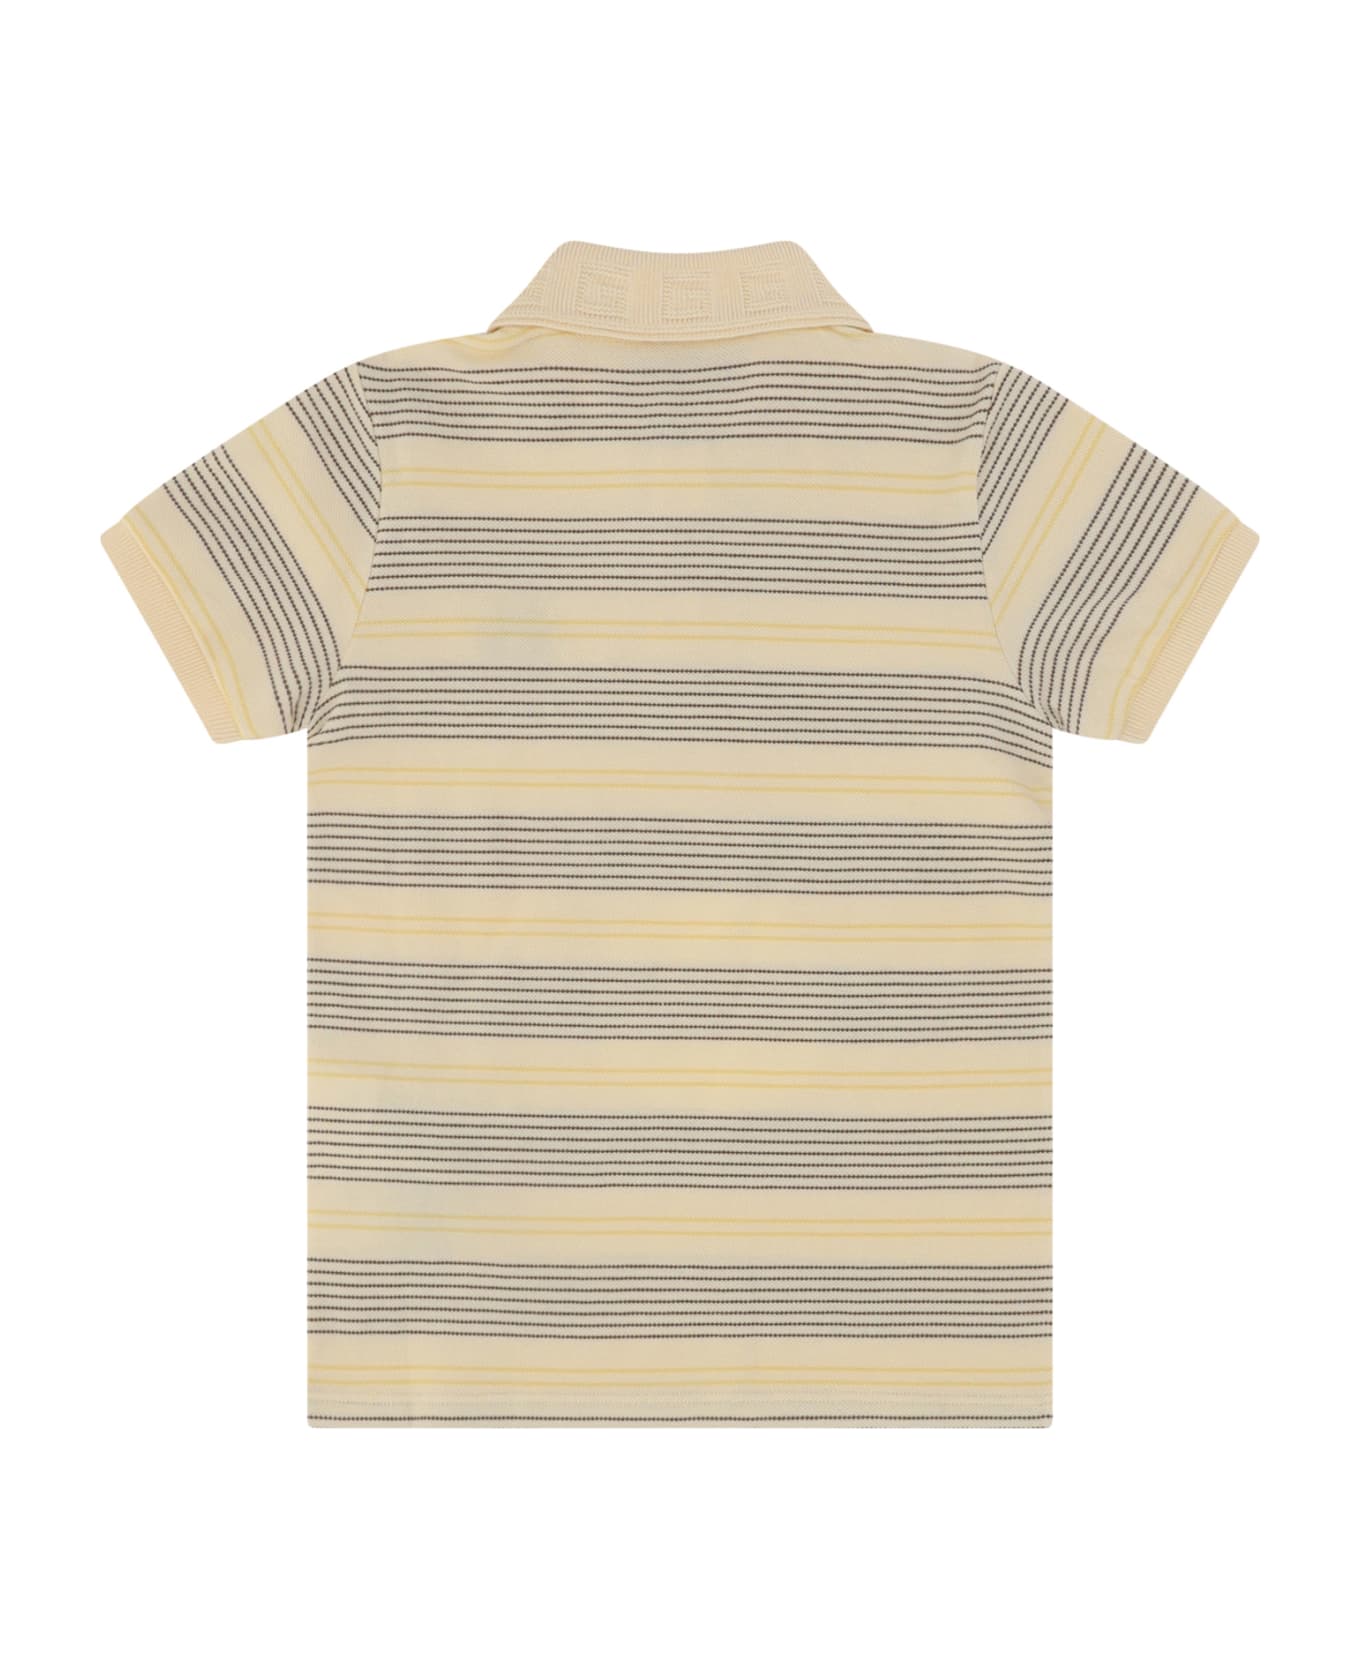 Gucci Polo Shirt For Boy - Yellow/brown